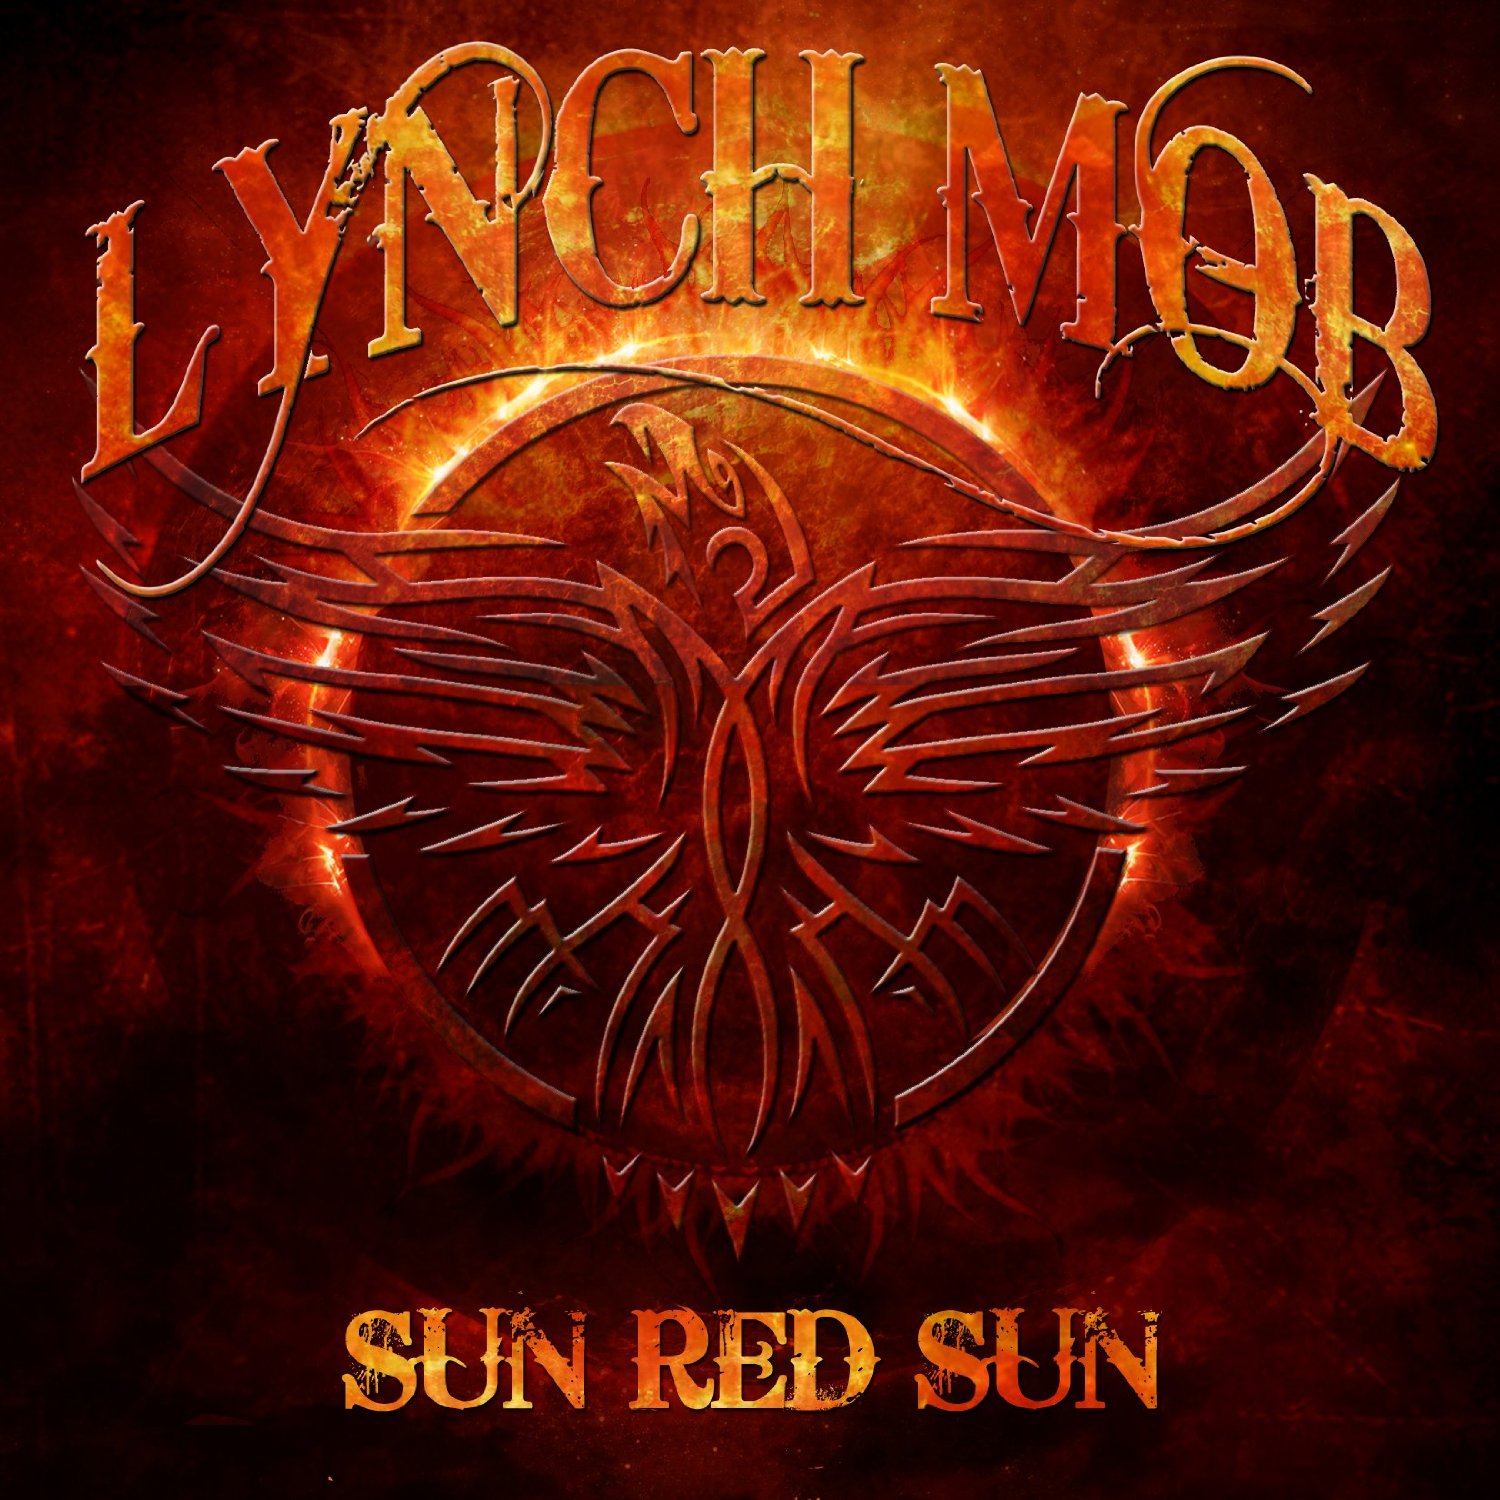 LYNCH MOB - Sun Red Sun cover 